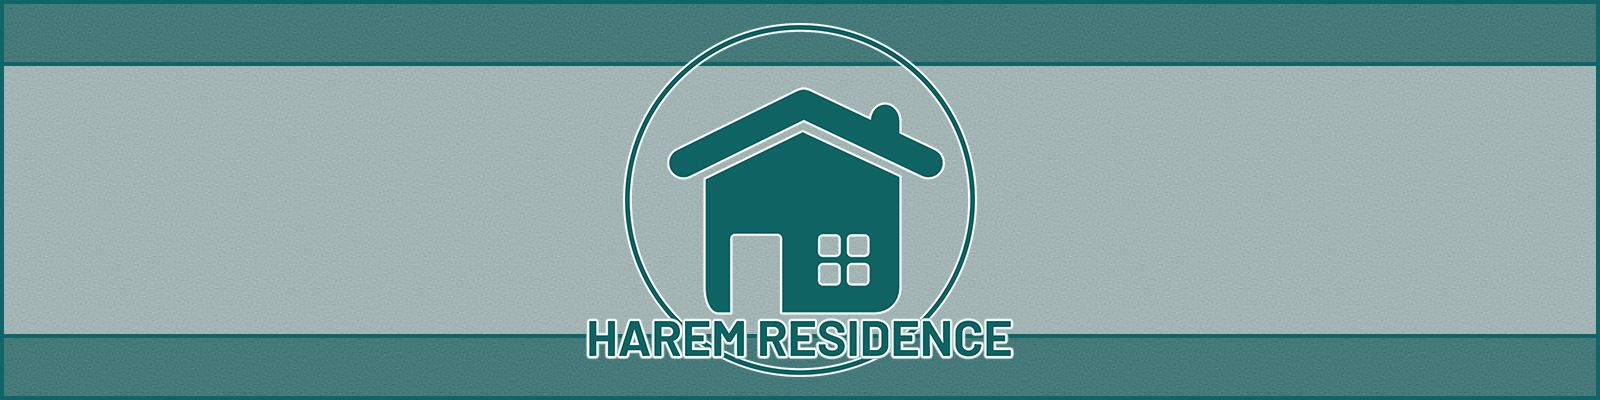 Harem Residence Apk Android Adult Game Download